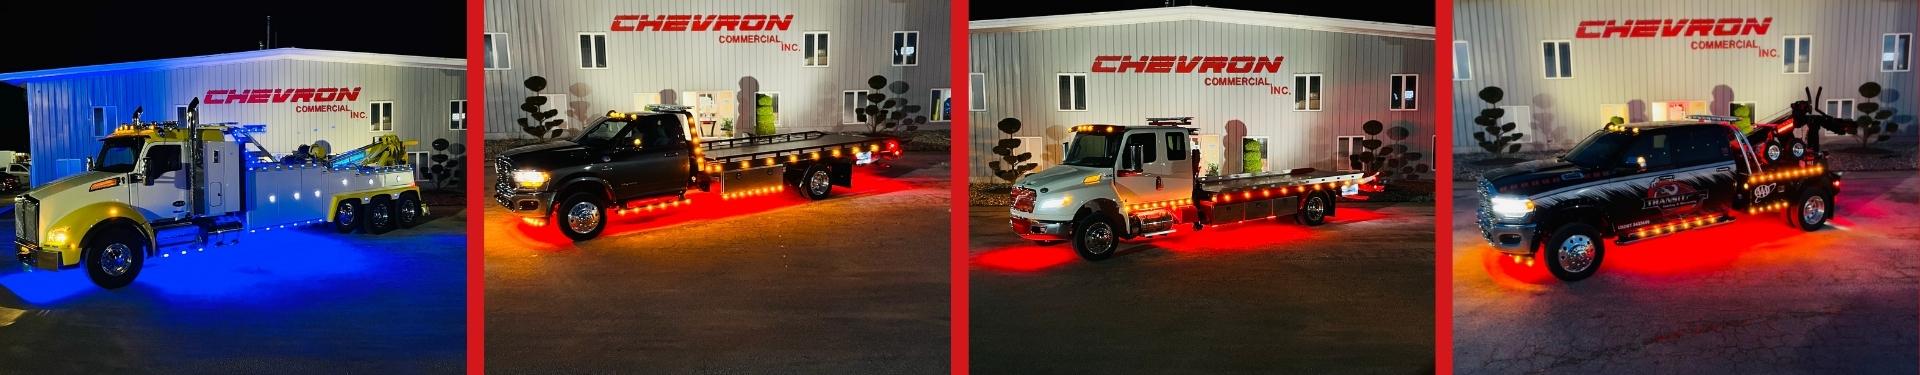 chevron light up truck gallery image